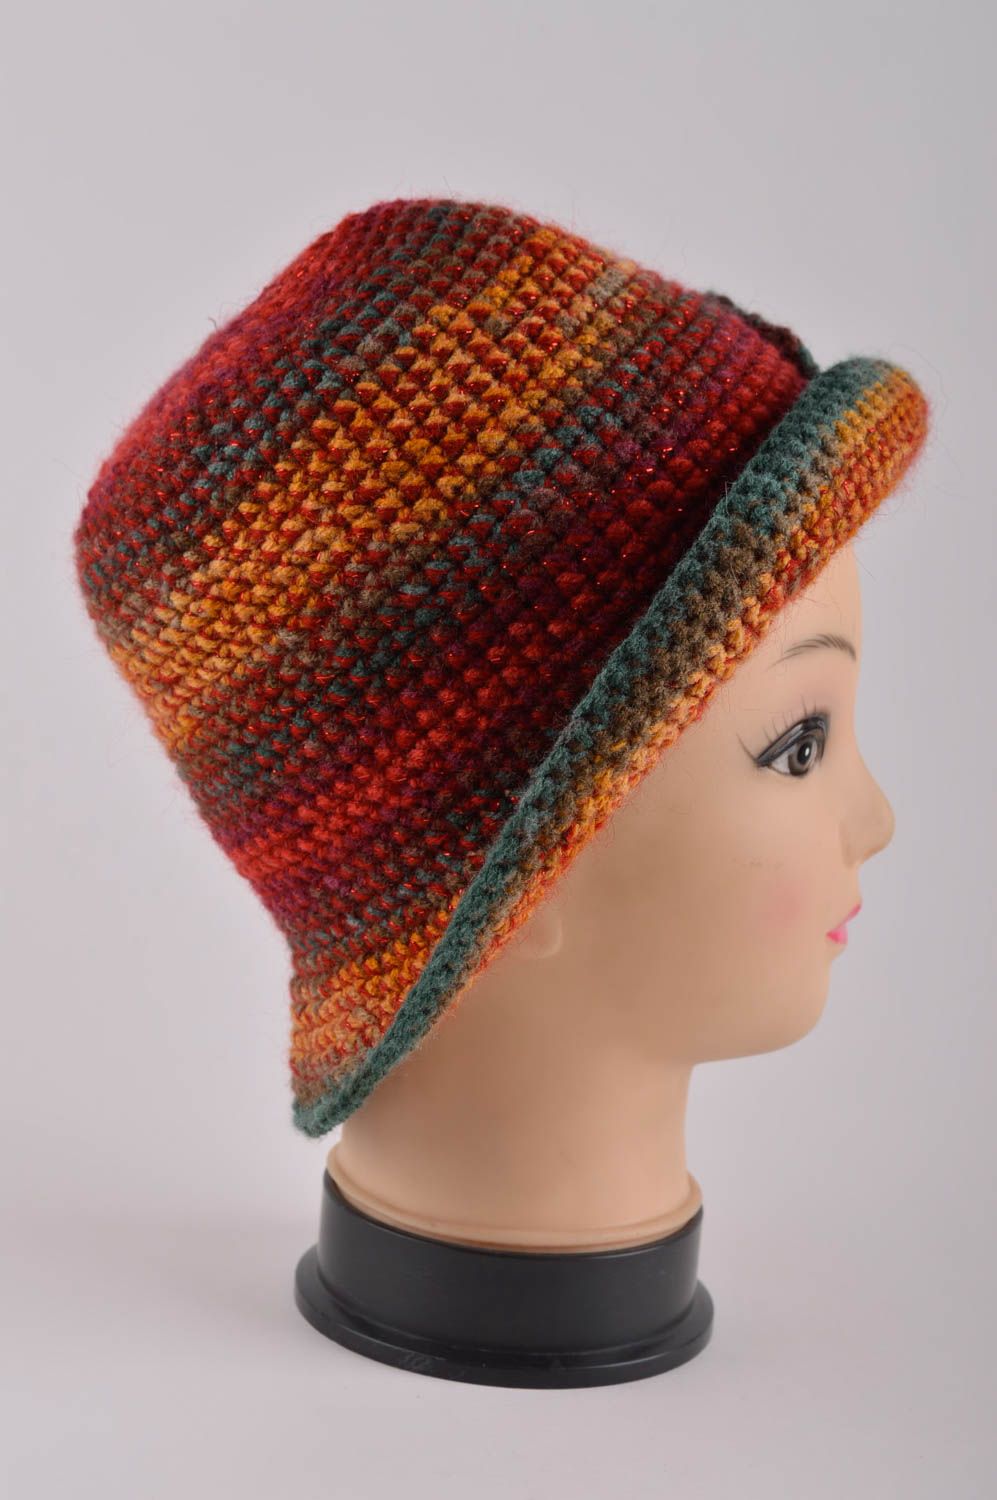 Handmade crochet hat fashion accessories ladies hat best gifts for women photo 4